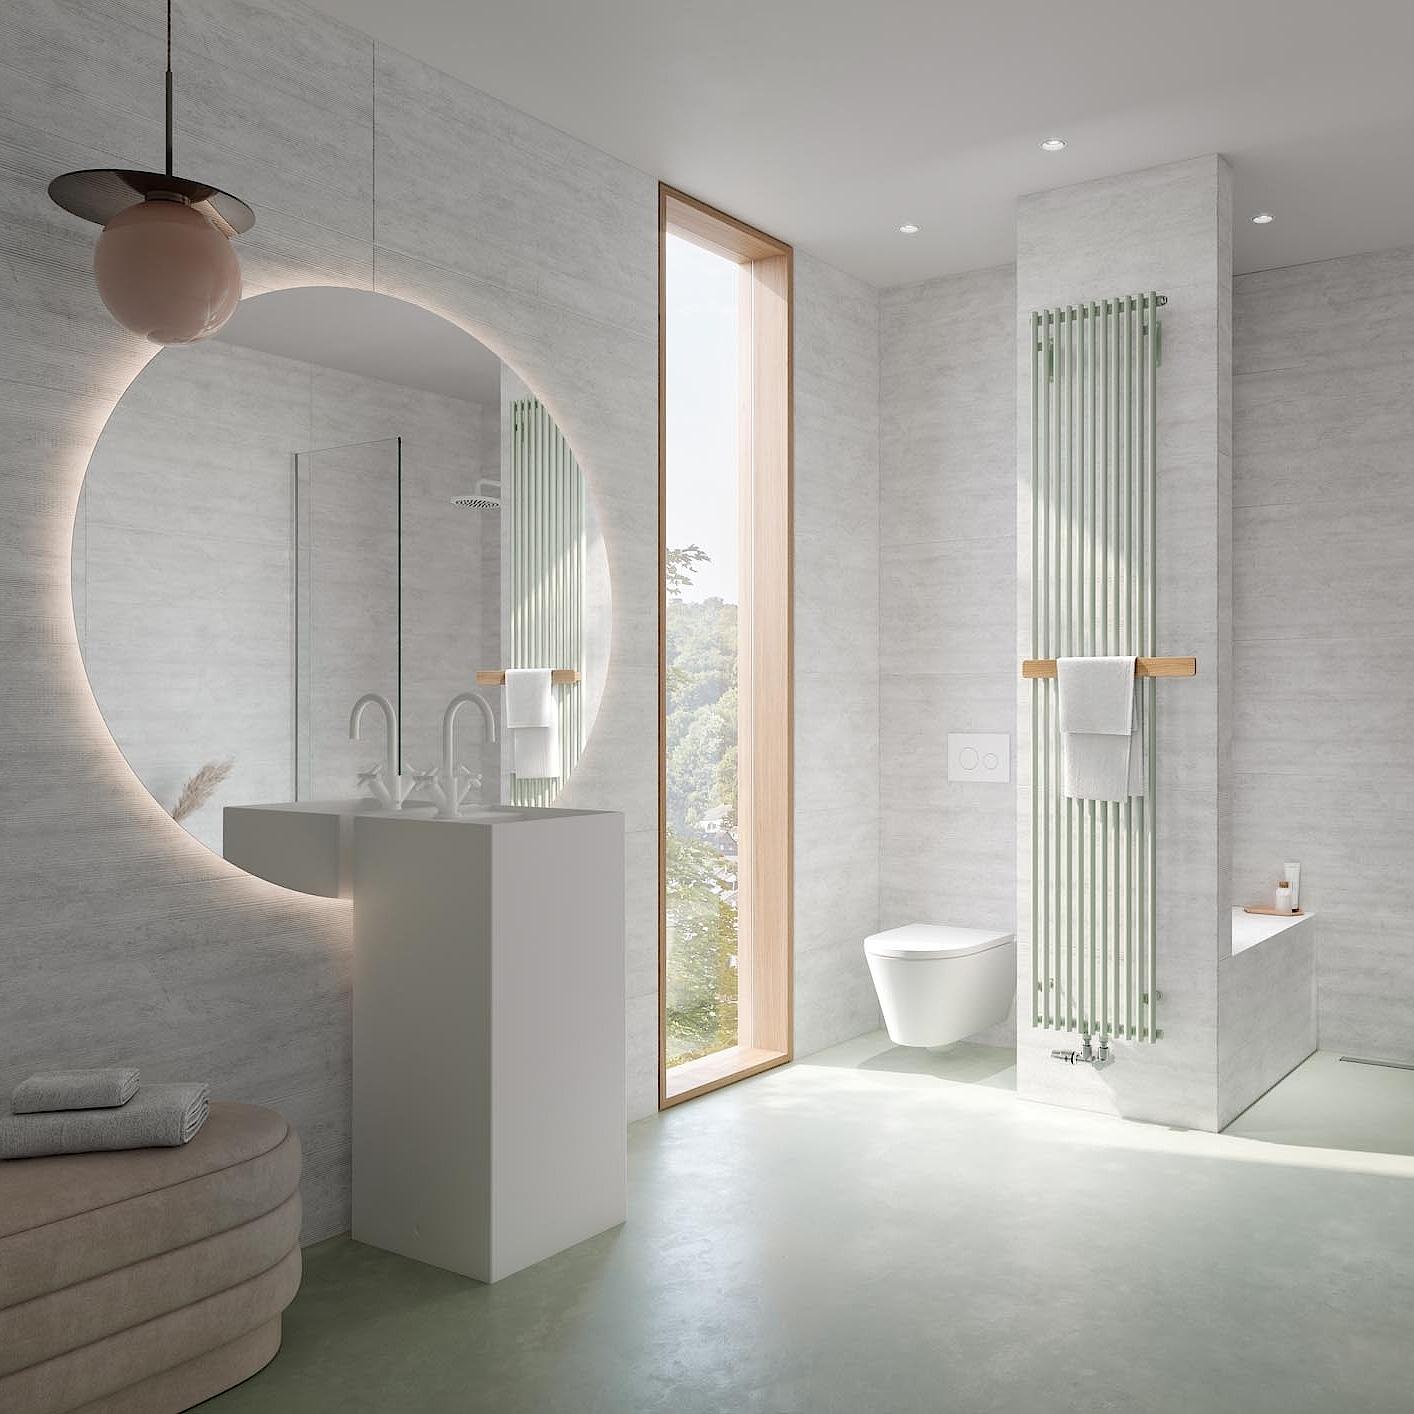 Kermi Pio plus design and bathroom radiators – narrow radiator with a classic design.